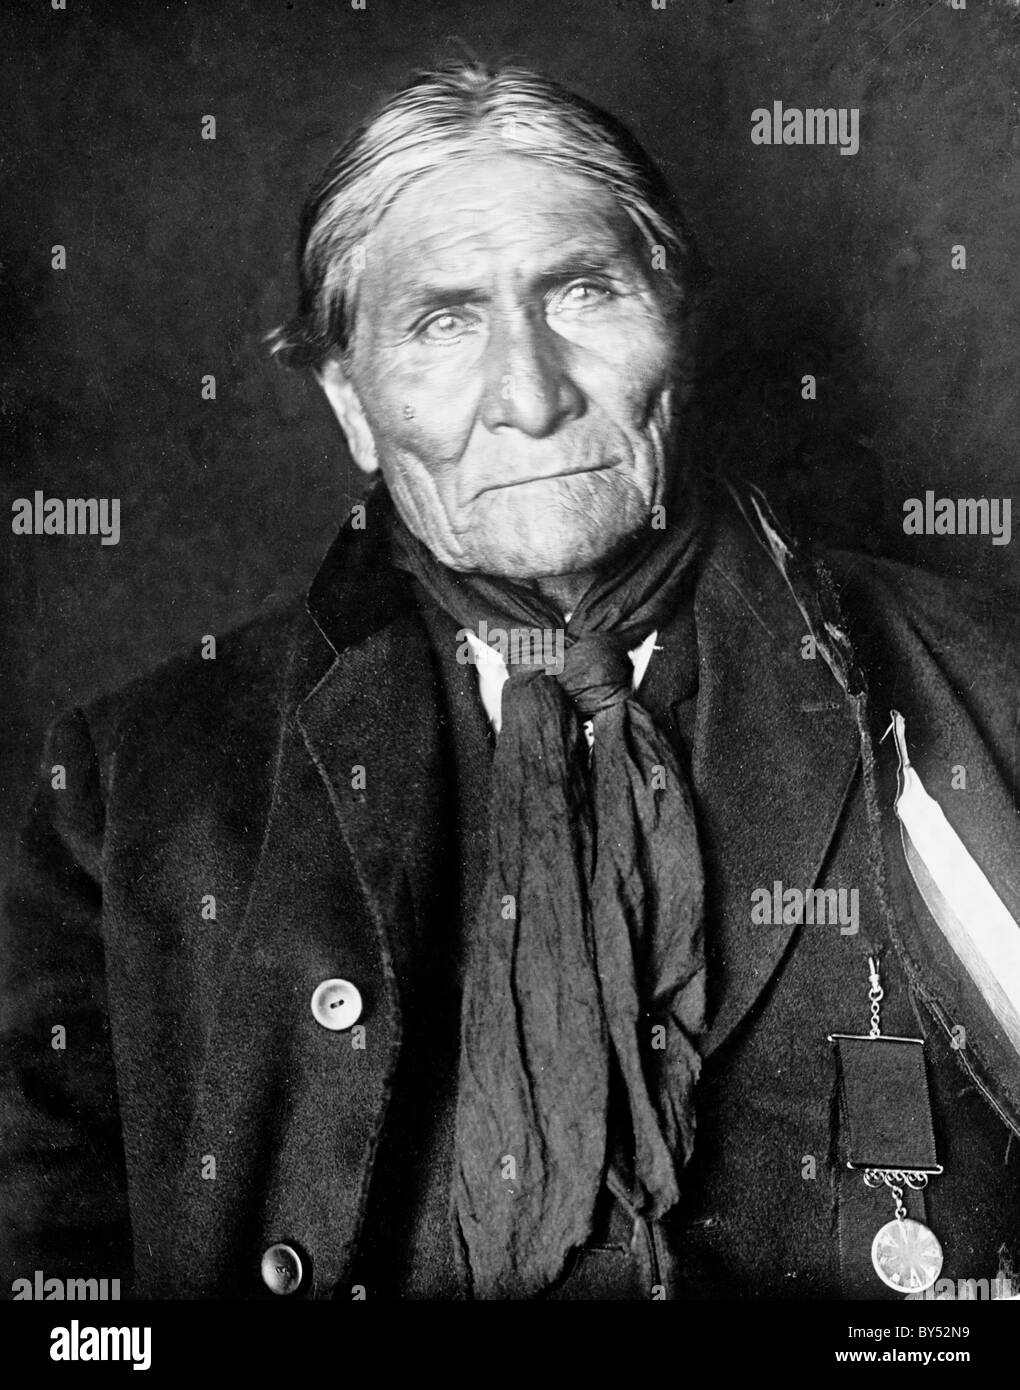 Geronimo, Native American leader of the Chiricahua Apache. Stock Photo